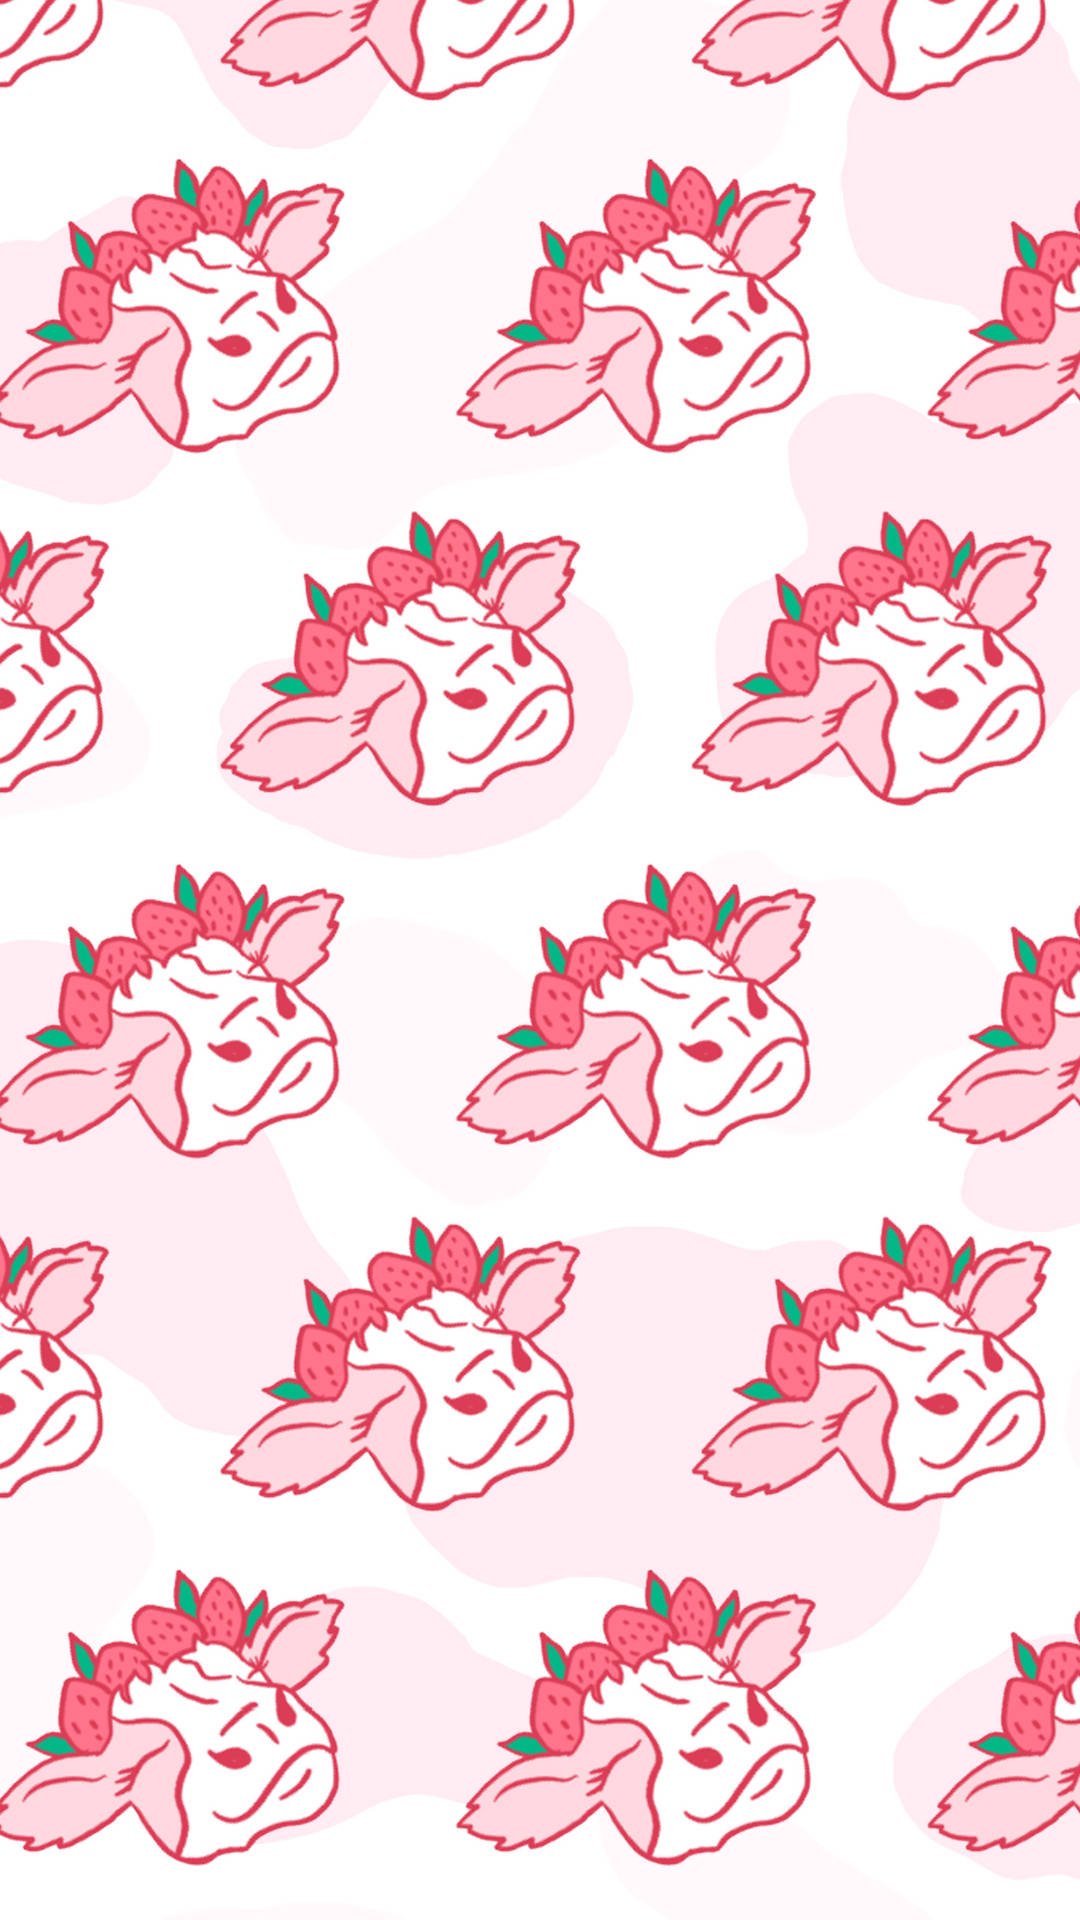 Strawberry Cow Crown Wallpaper